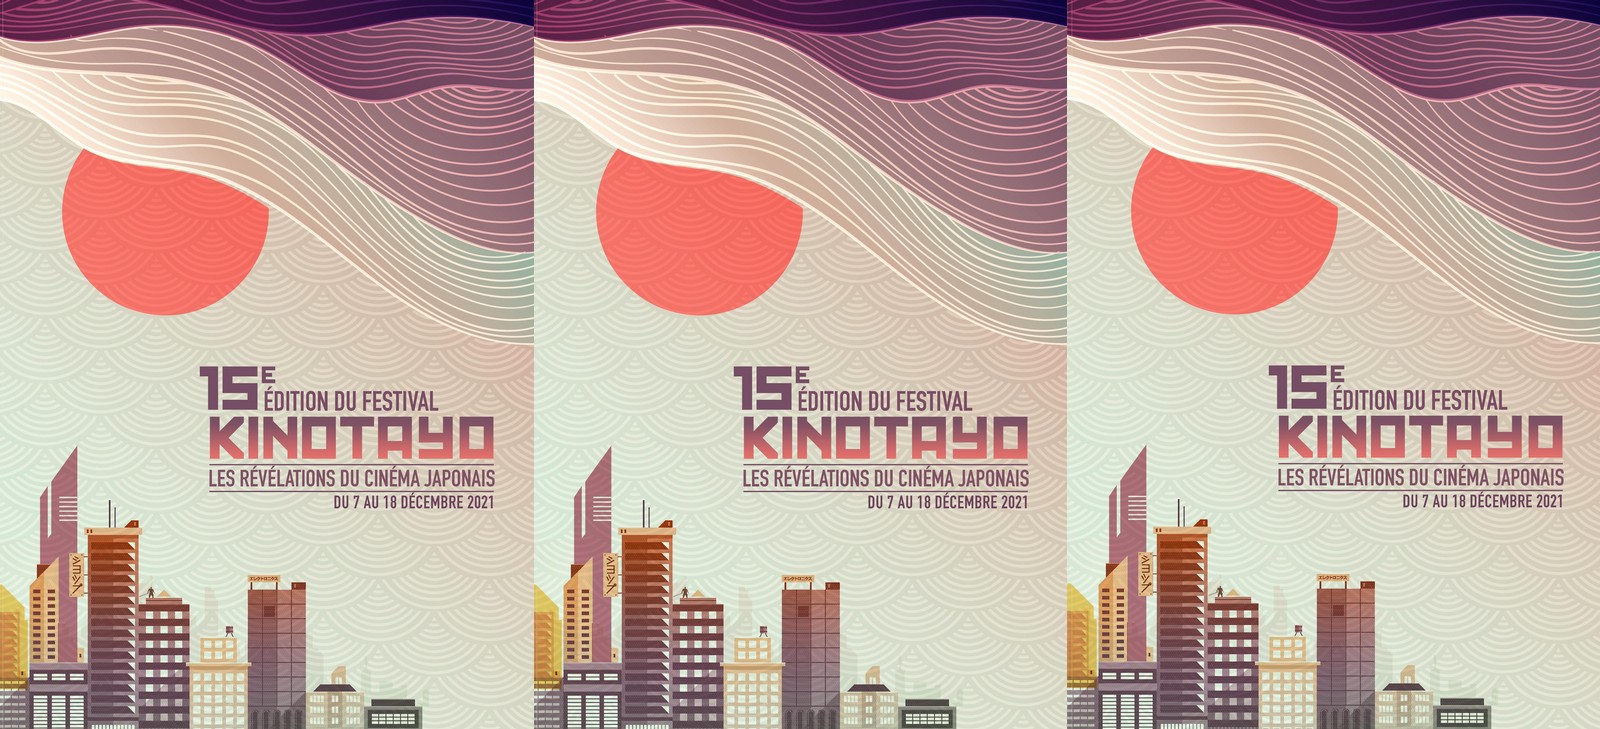 Le palmarès du festival Kinotayo 2021 - Le Polyester